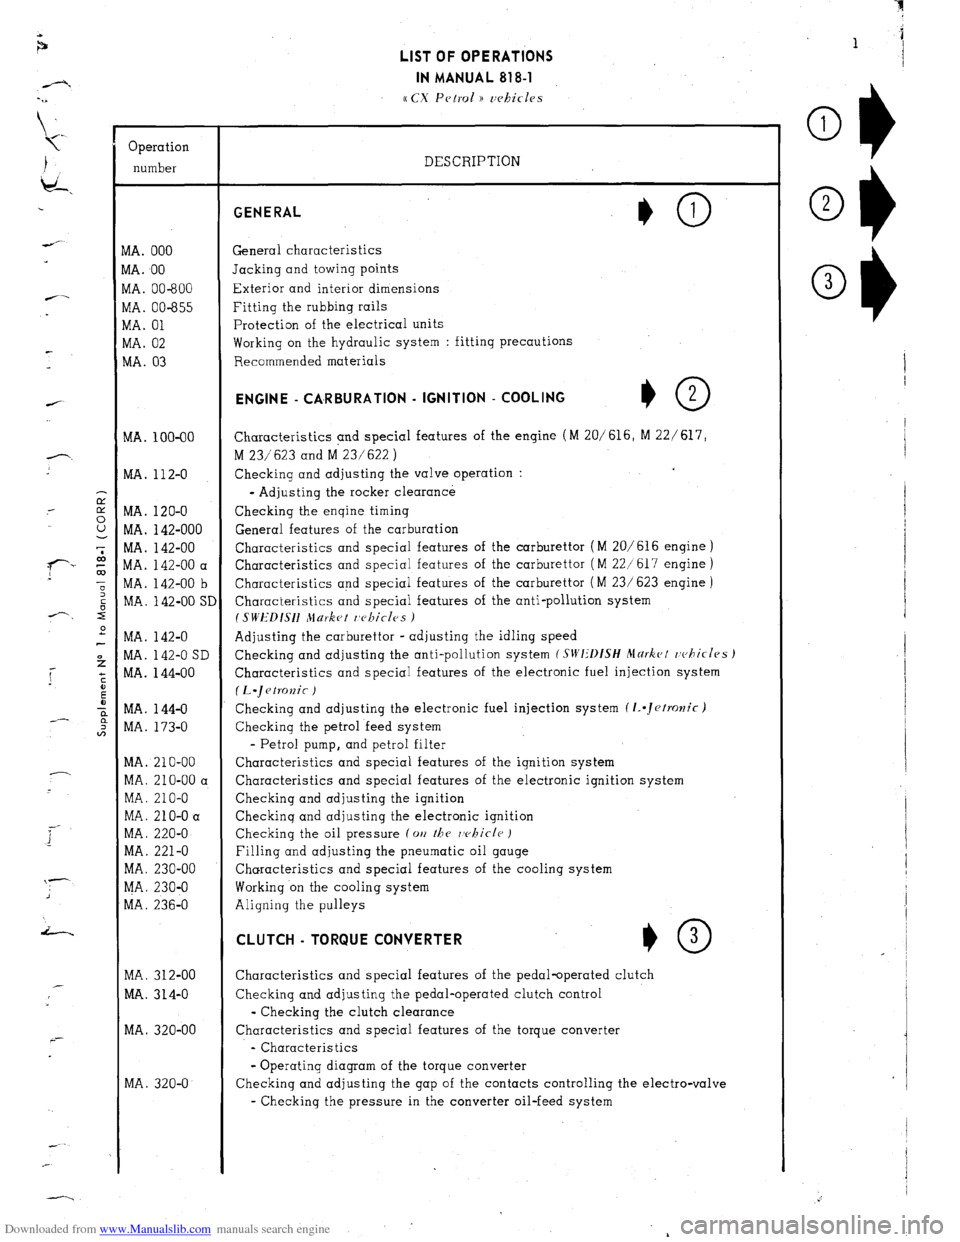 Citroen CX 1982 1.G Workshop Manual Downloaded from www.Manualslib.com manuals search engine Operation 
number 
VIA. 000 
VIA. 00 
VIA. 00-600 
vlA. 00-655 
VIA. 01 
WA. 02 
MA. 03 
MA. 100-00 
MA. 112-O 
MA. 120-O 
MA. 142-000 
MA. 142